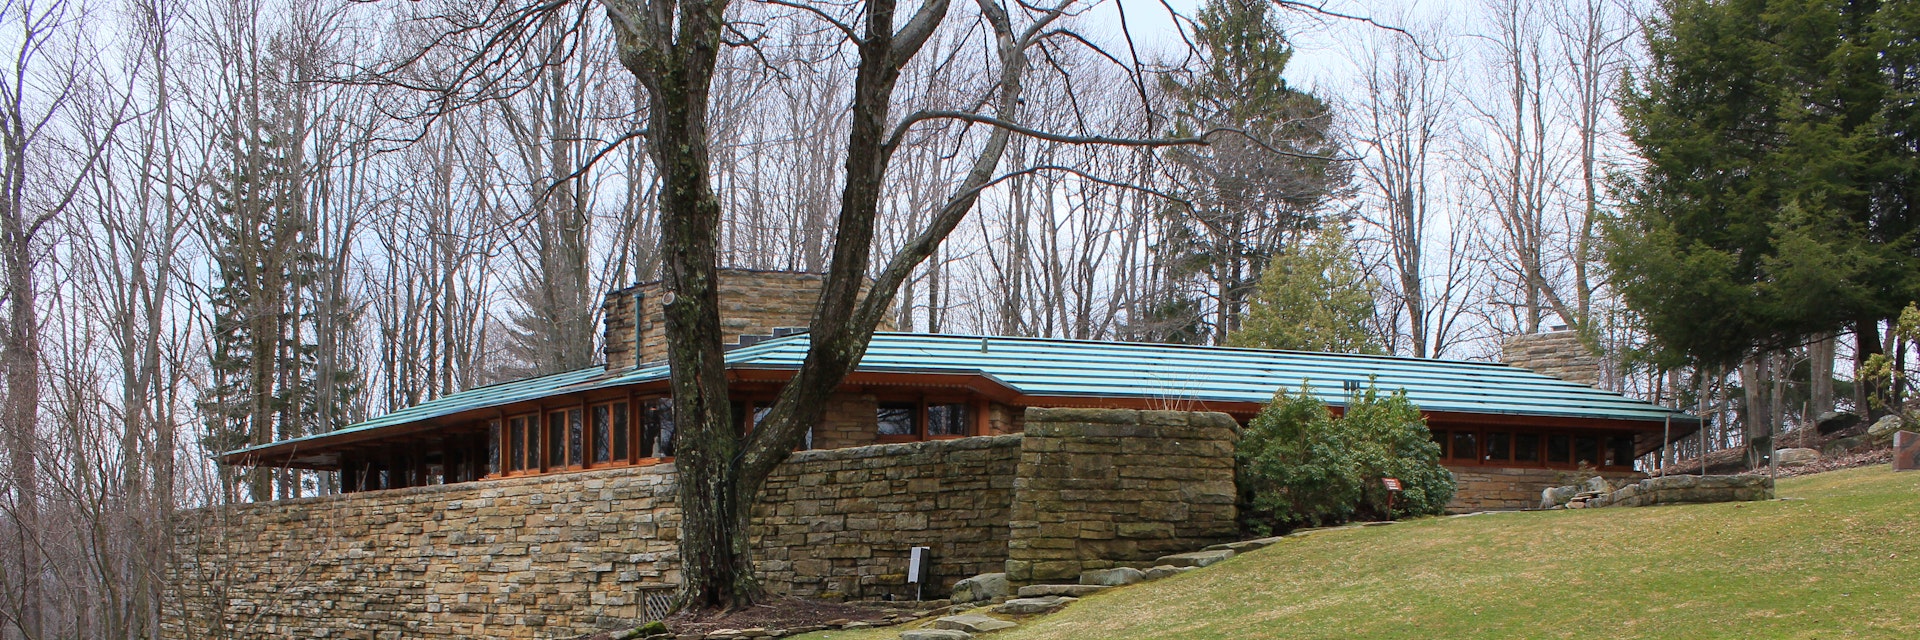 Chalk Hill, PA - 03/21/2015: Kentuck Knob. Architect Frank Lloyd Wright. built 1954; Shutterstock ID 1179463627; full: Digital; gl: 65050; netsuite: poi; your: Barbara Di Castro
1179463627